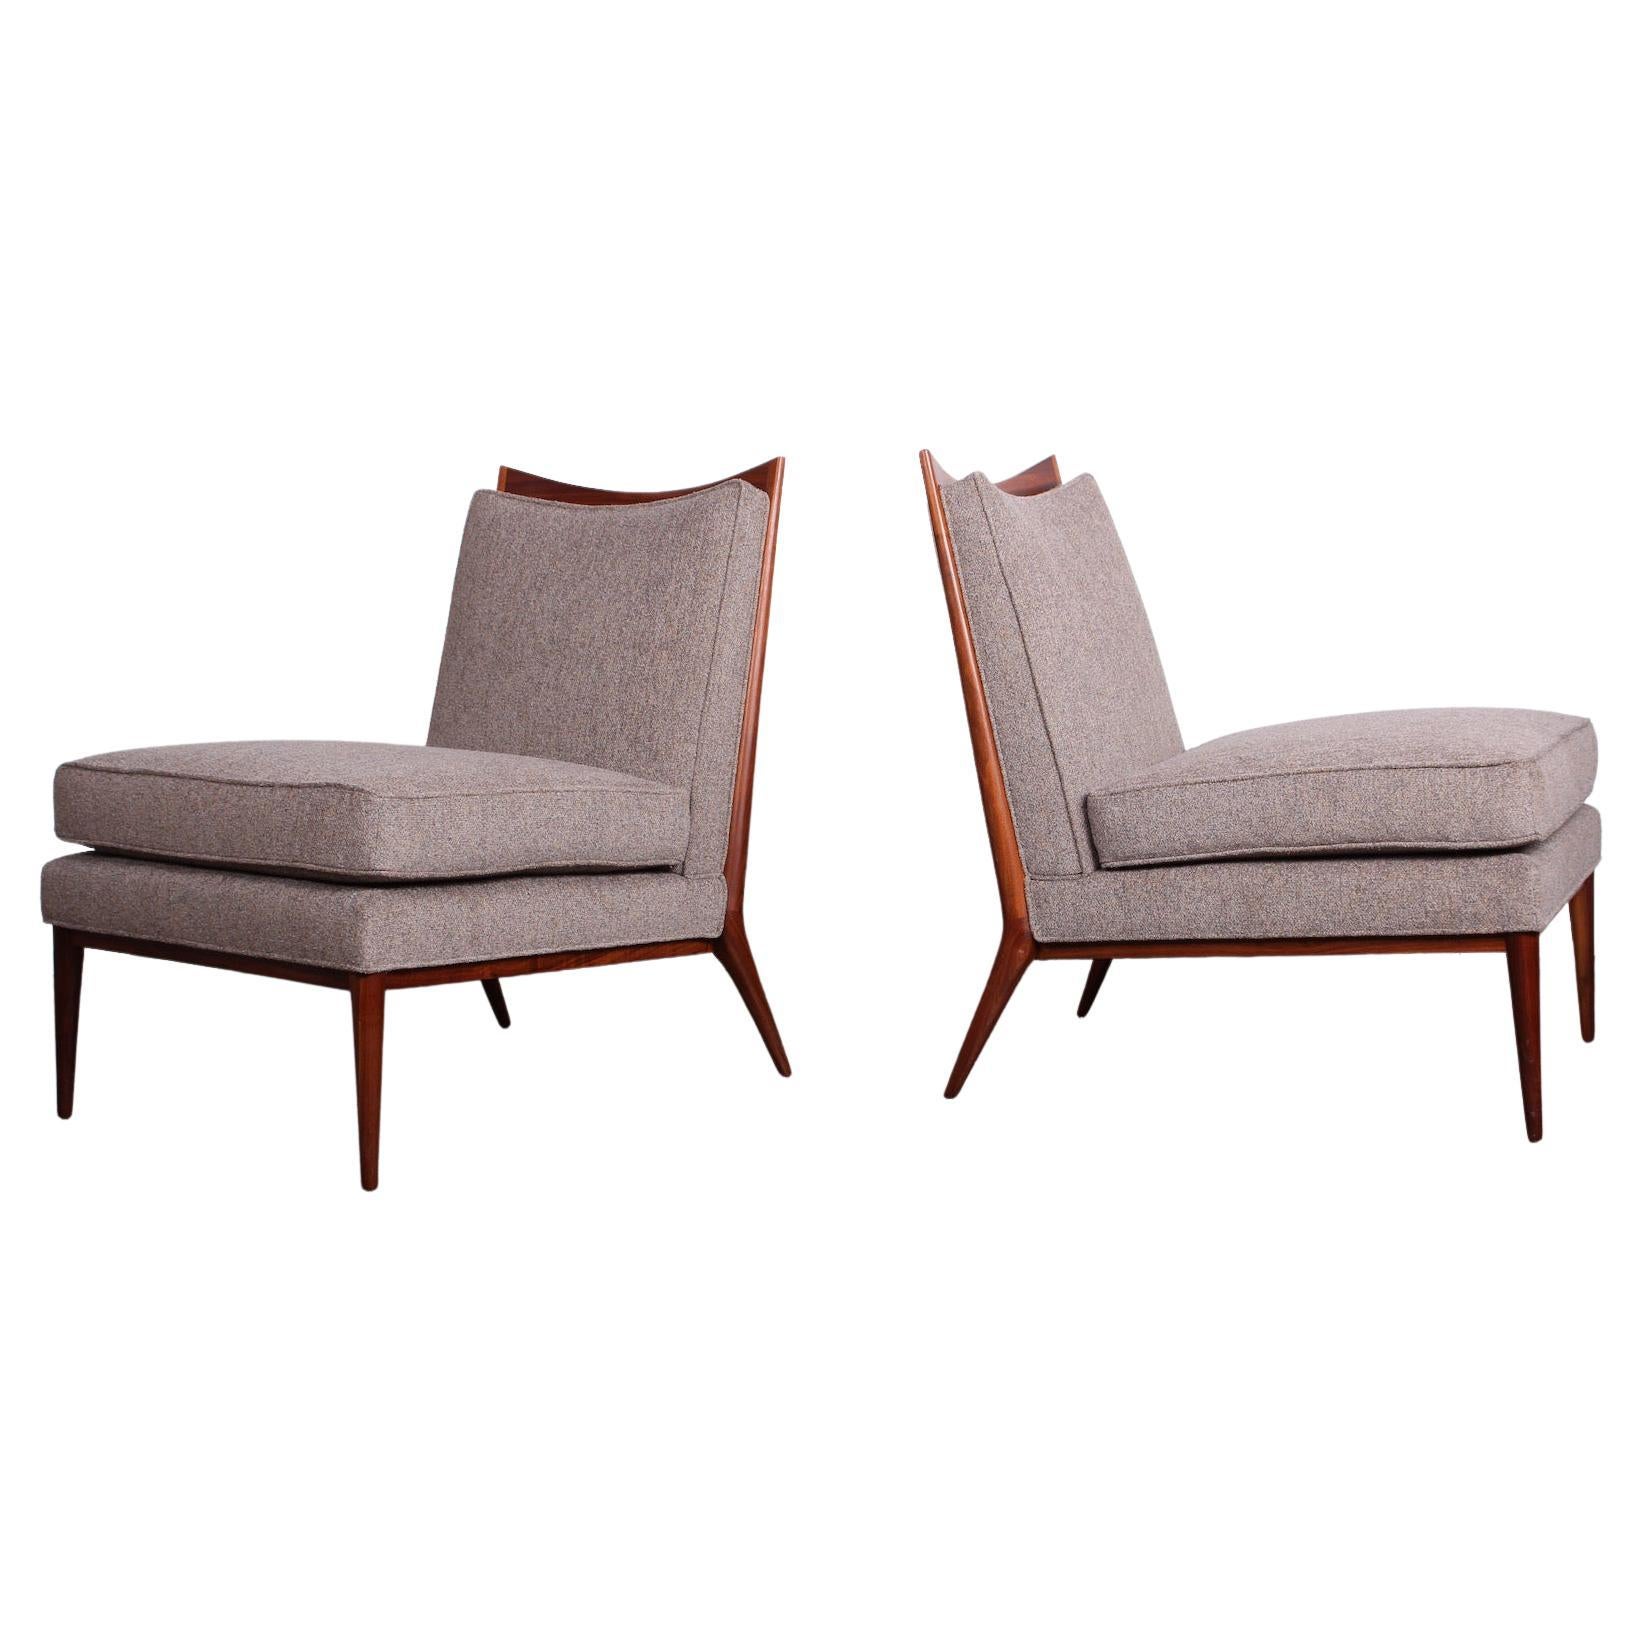 Pair of Slipper Chairs by Paul McCobb